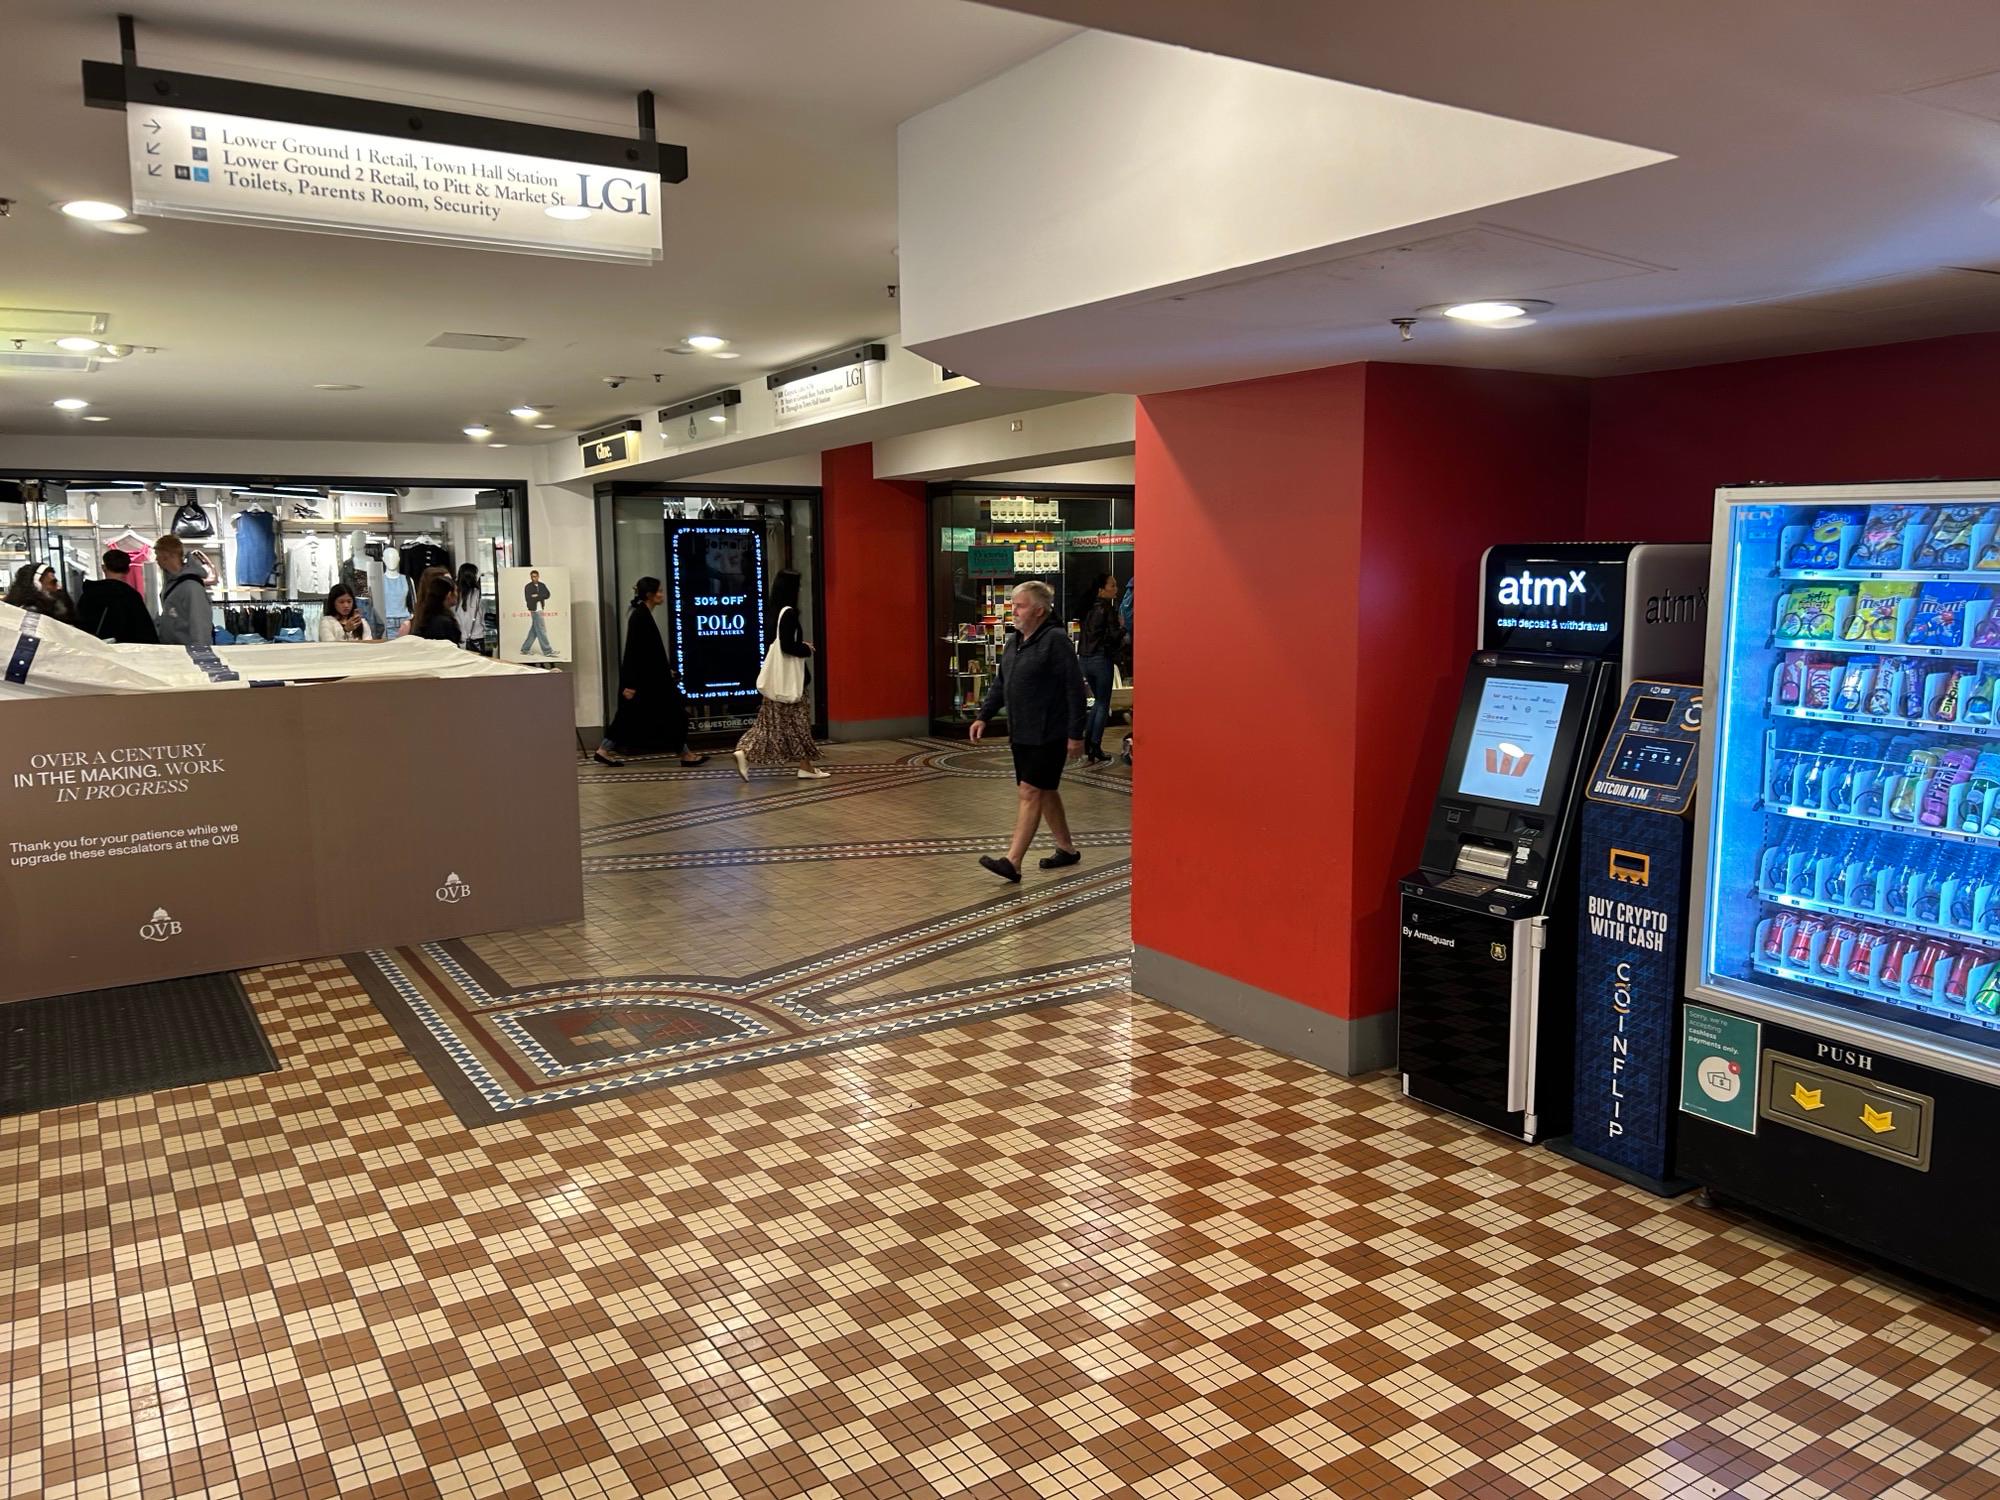 CoinFlip Bitcoin ATM - QVB Sydney (Sydney) Sydney (13) 0068 9526